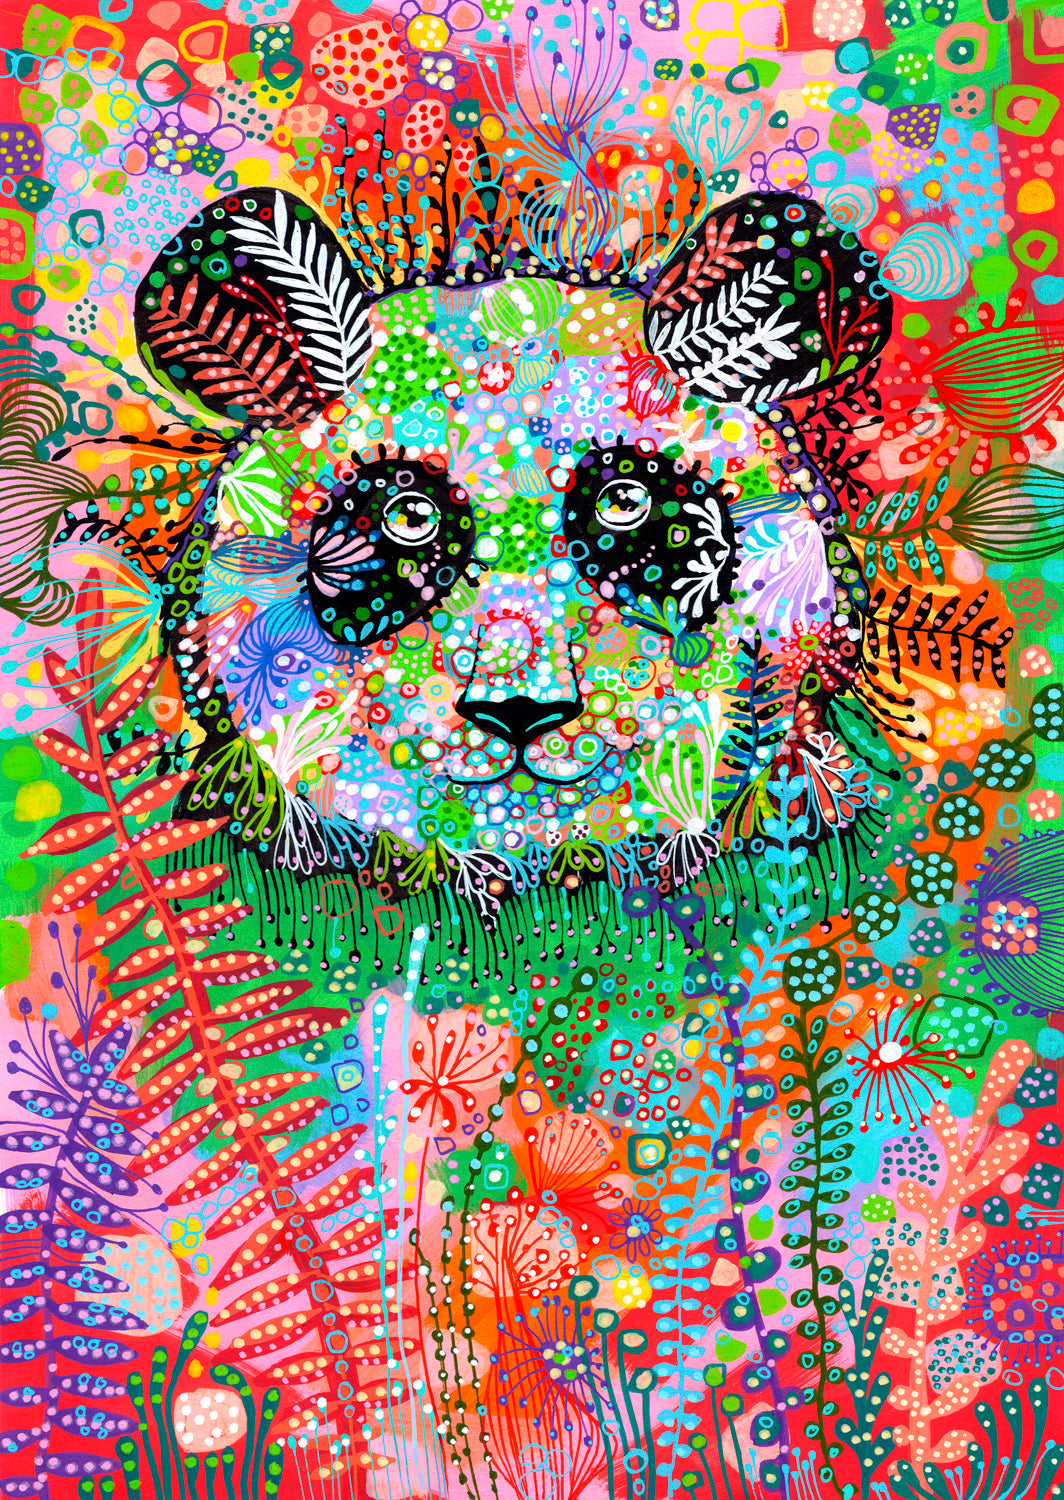 1500 Pieces Jigsaw Puzzle - Enigmatic Panda (2238)